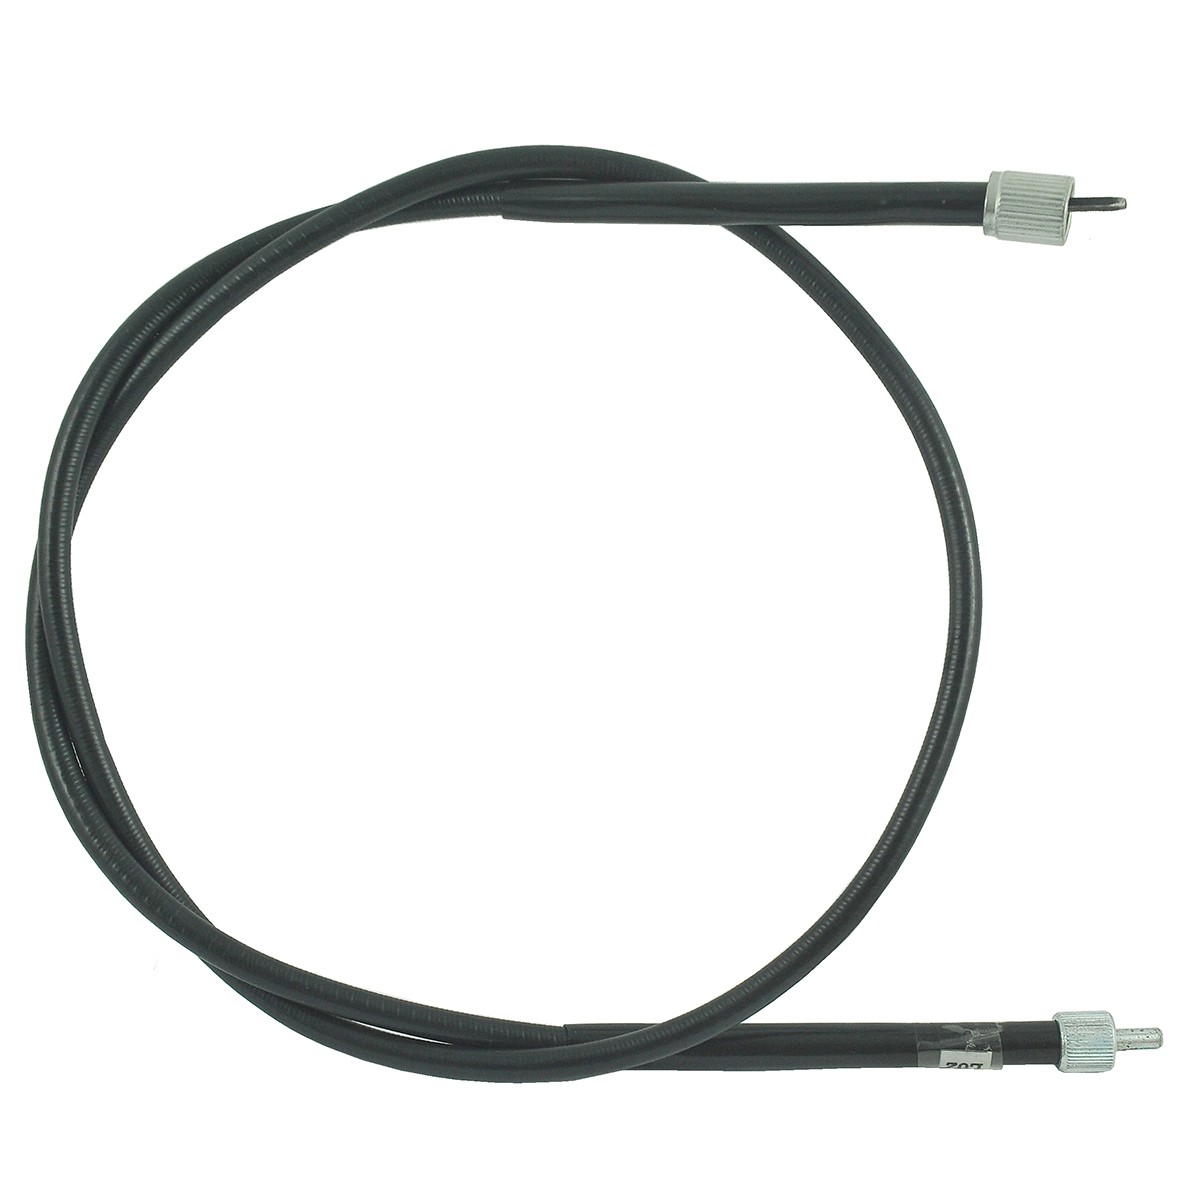 Counter cable / 1200 mm / Kubota L02//L1802/L2002/L2202/L2402 / 38240-34654 / 5-25-123-02